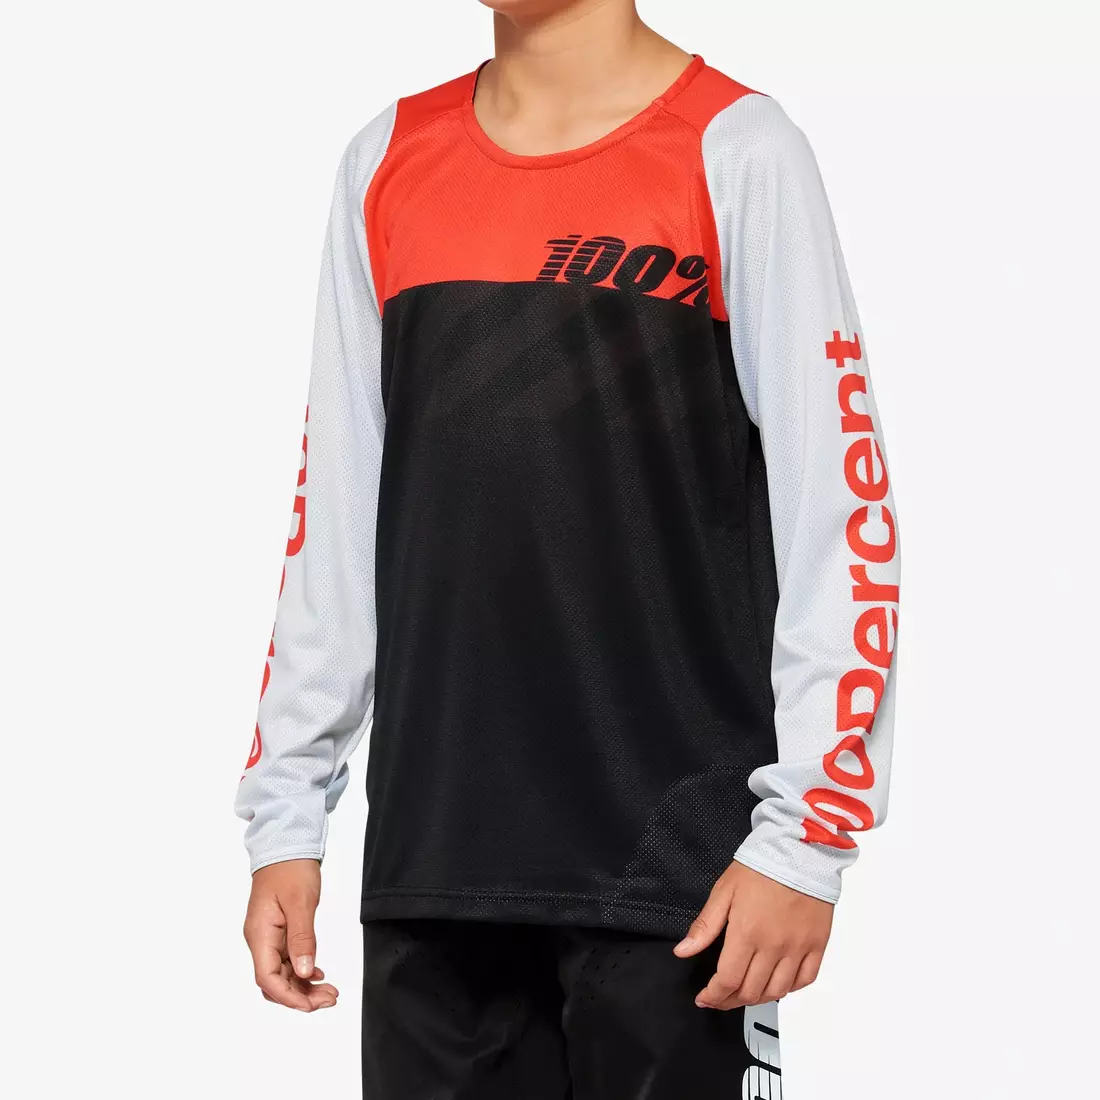 100% R-CORE Youth juniorska koszulka rowerowa z długim rękawem, black racer red 